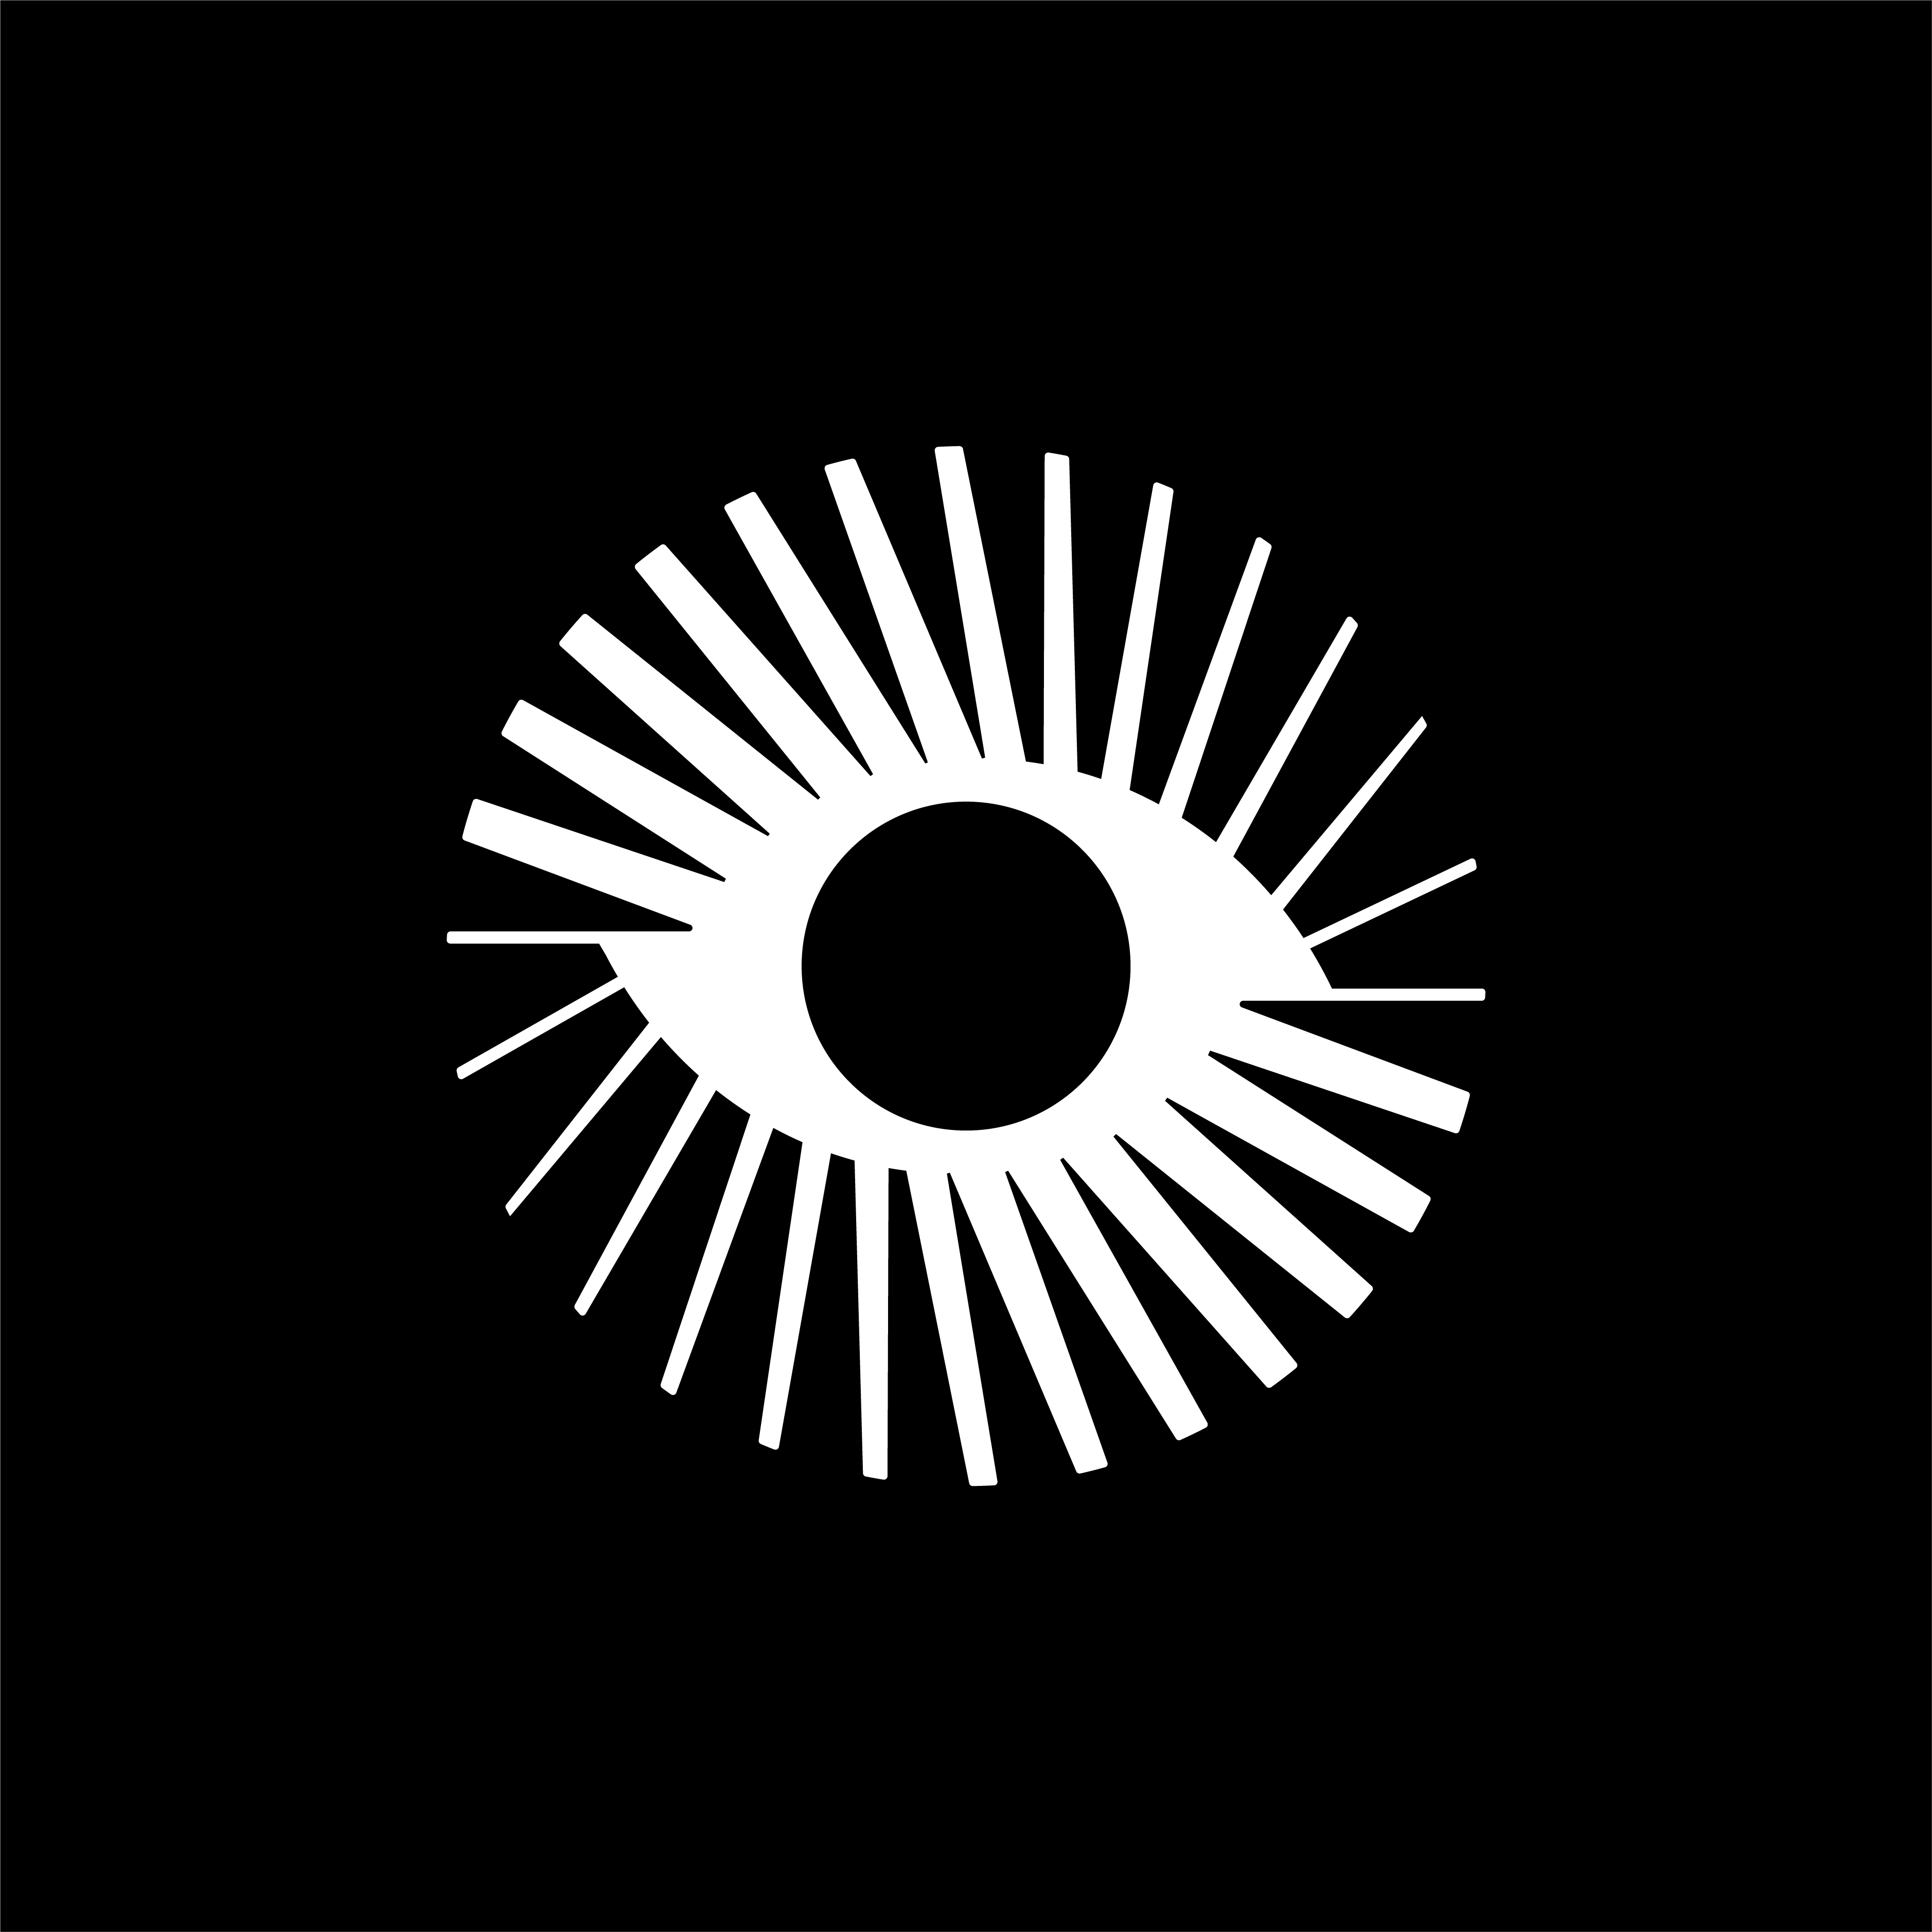 Eye loading logo design by logo designer Pragmatika for your inspiration and for the worlds largest logo competition